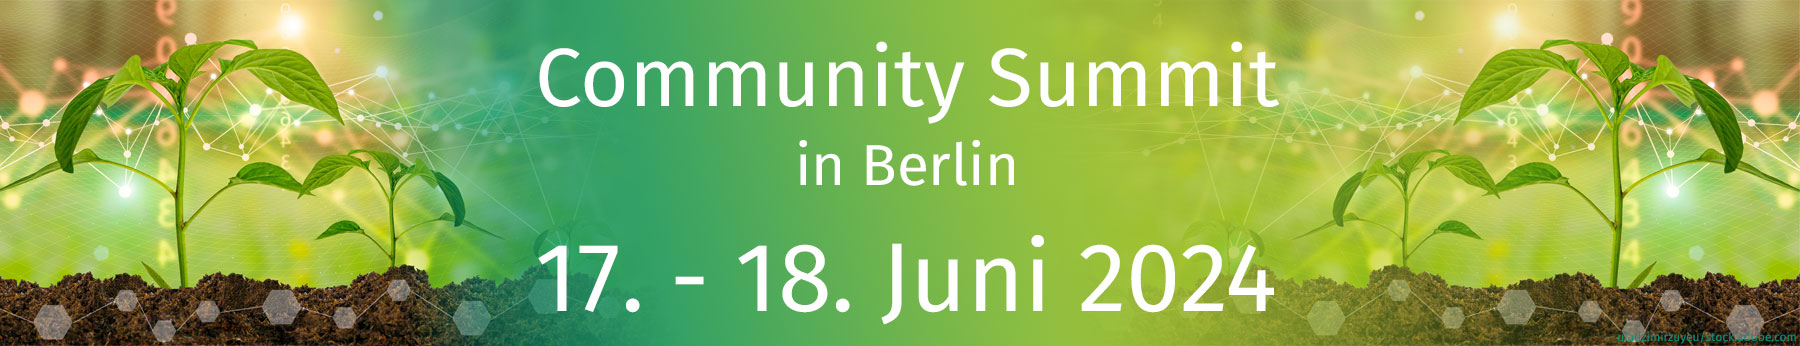 FAIRagro Community Summit 17. - 18. Juni 2024 in Berlin